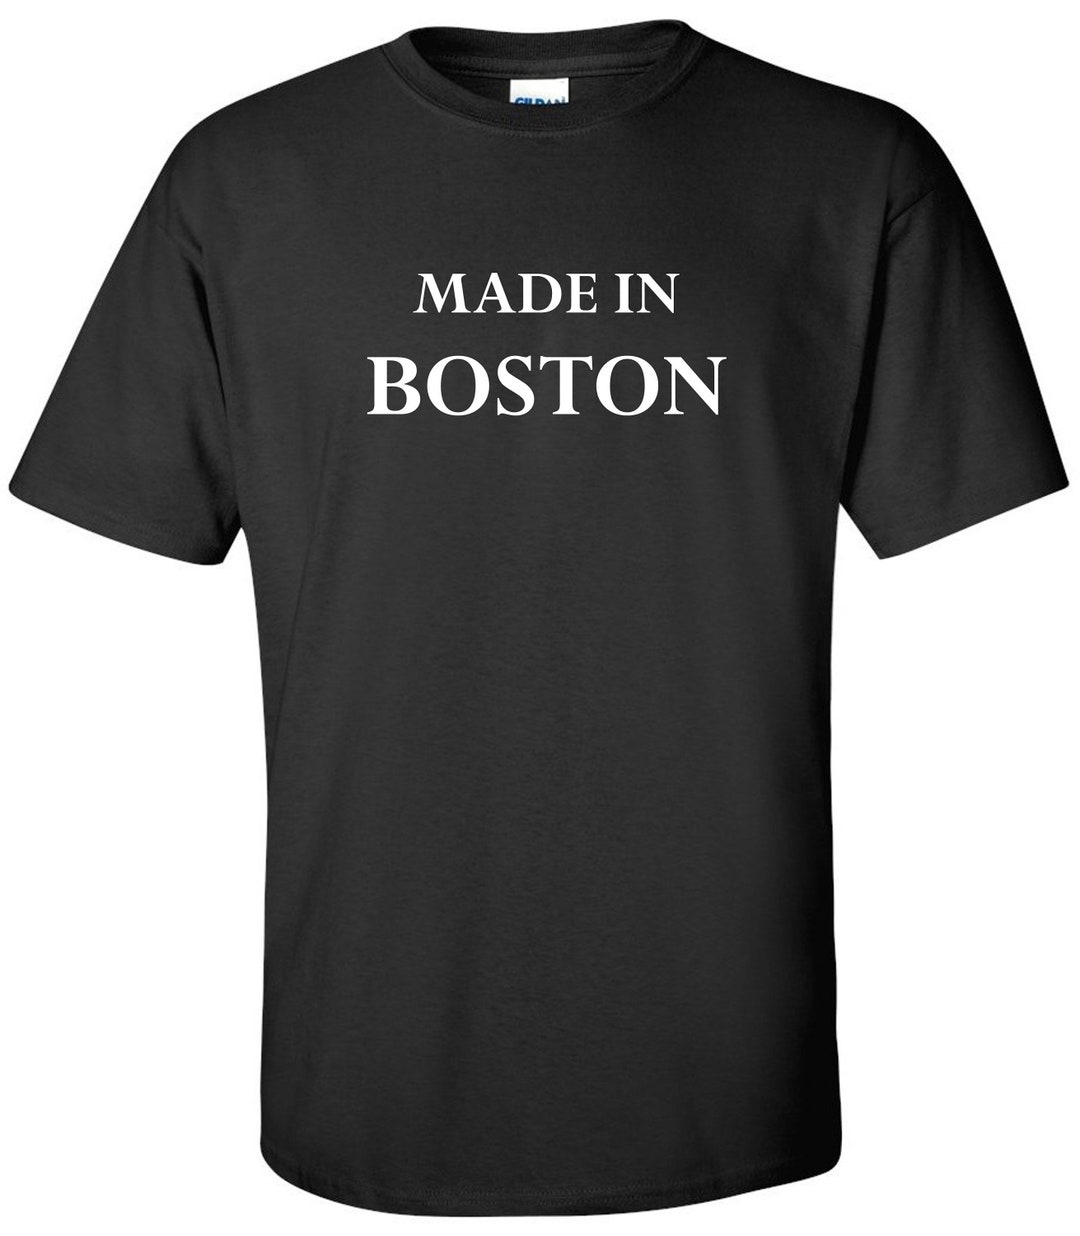 Made in Boston T-shirt, Boston Tee, Baseball Tail, Boston Tees, Boston  Gift, Hometown, Boston Shirt, Gifts Men's Unisex S-2XL, Tee Shirt 